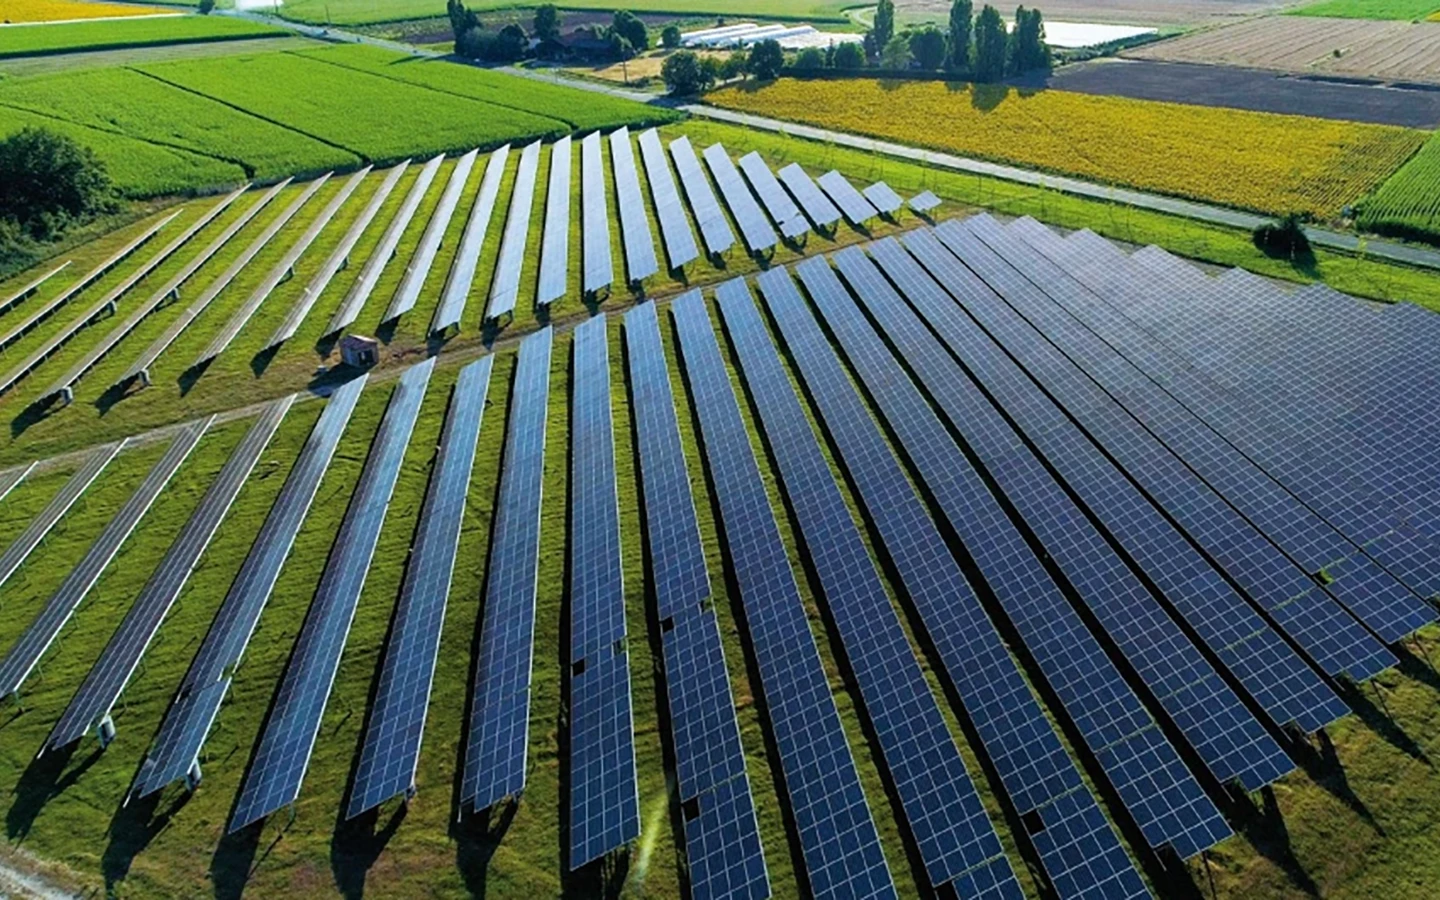 solar panel array in a farm field